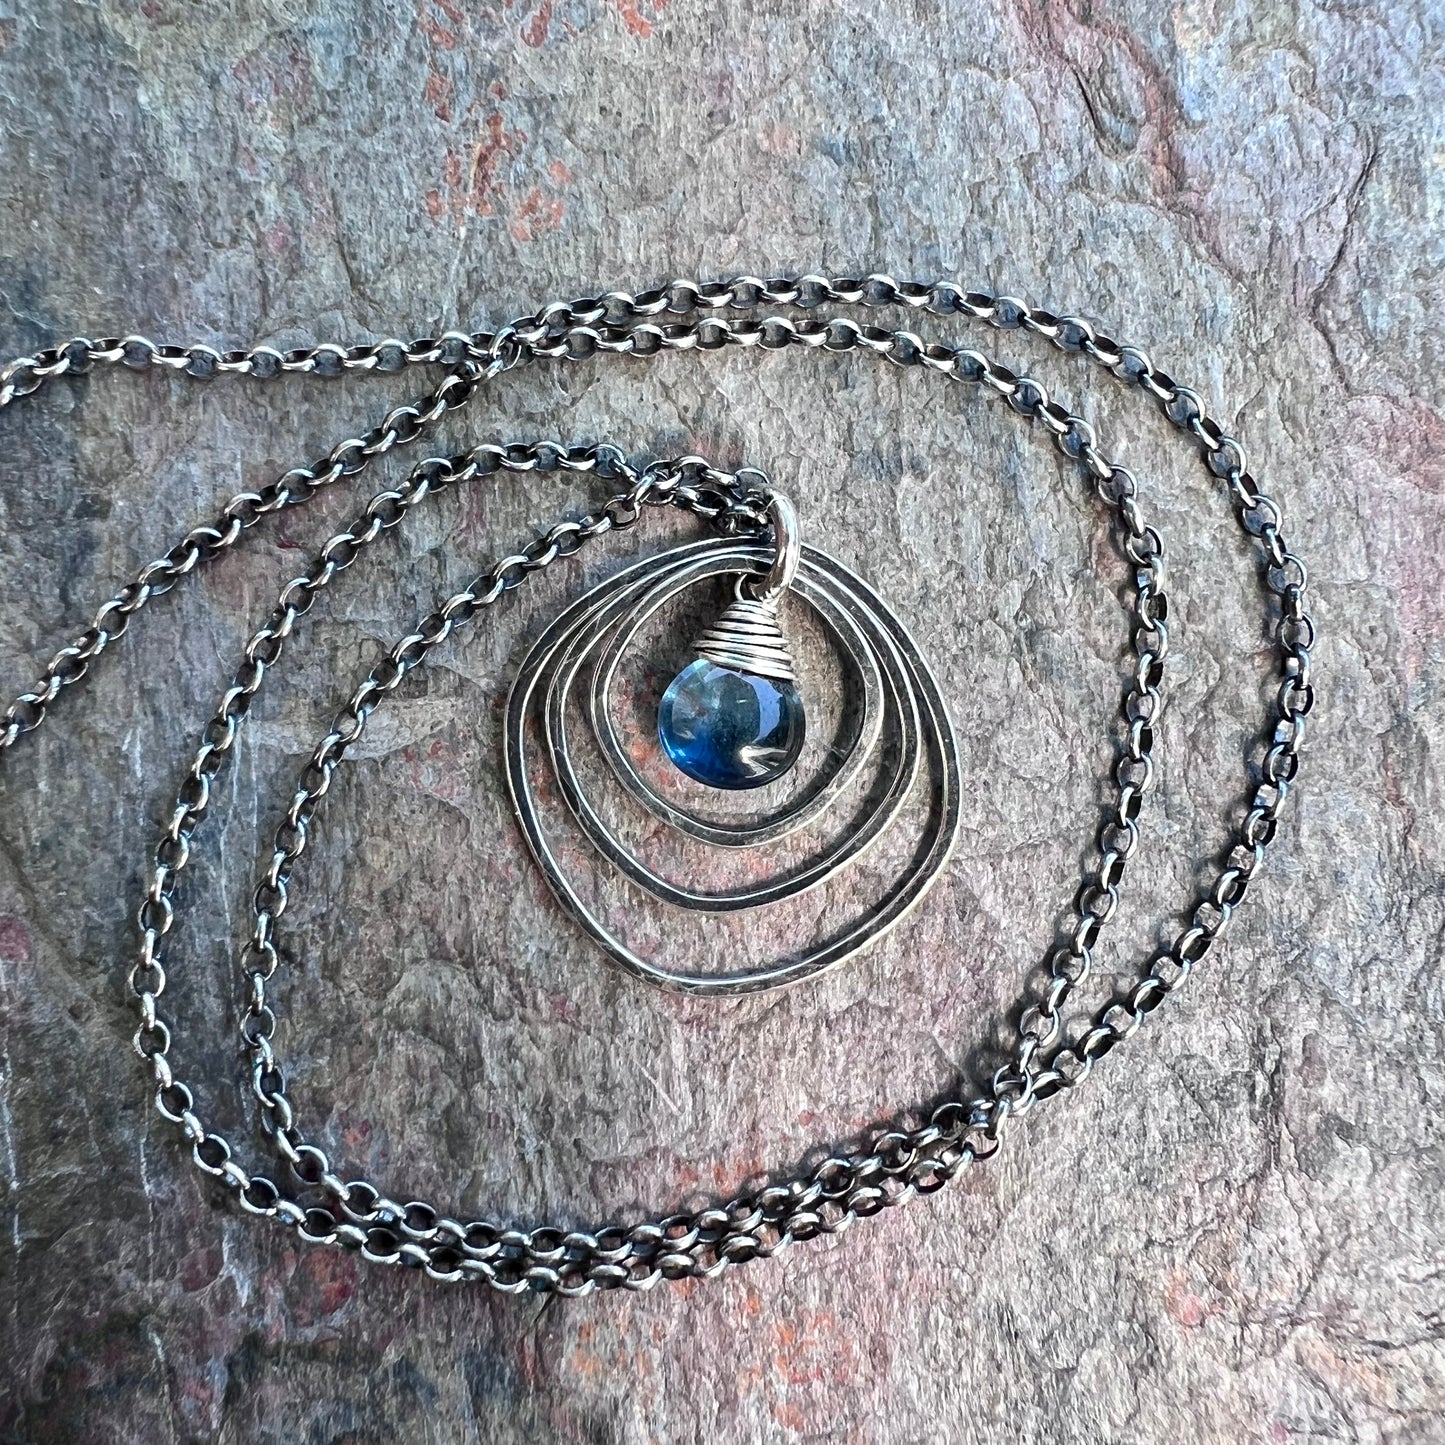 Sterling Silver Quartz Necklace - Blue Hydro Quartz in Hammered Silver Pendant on Sterling Silver Chain